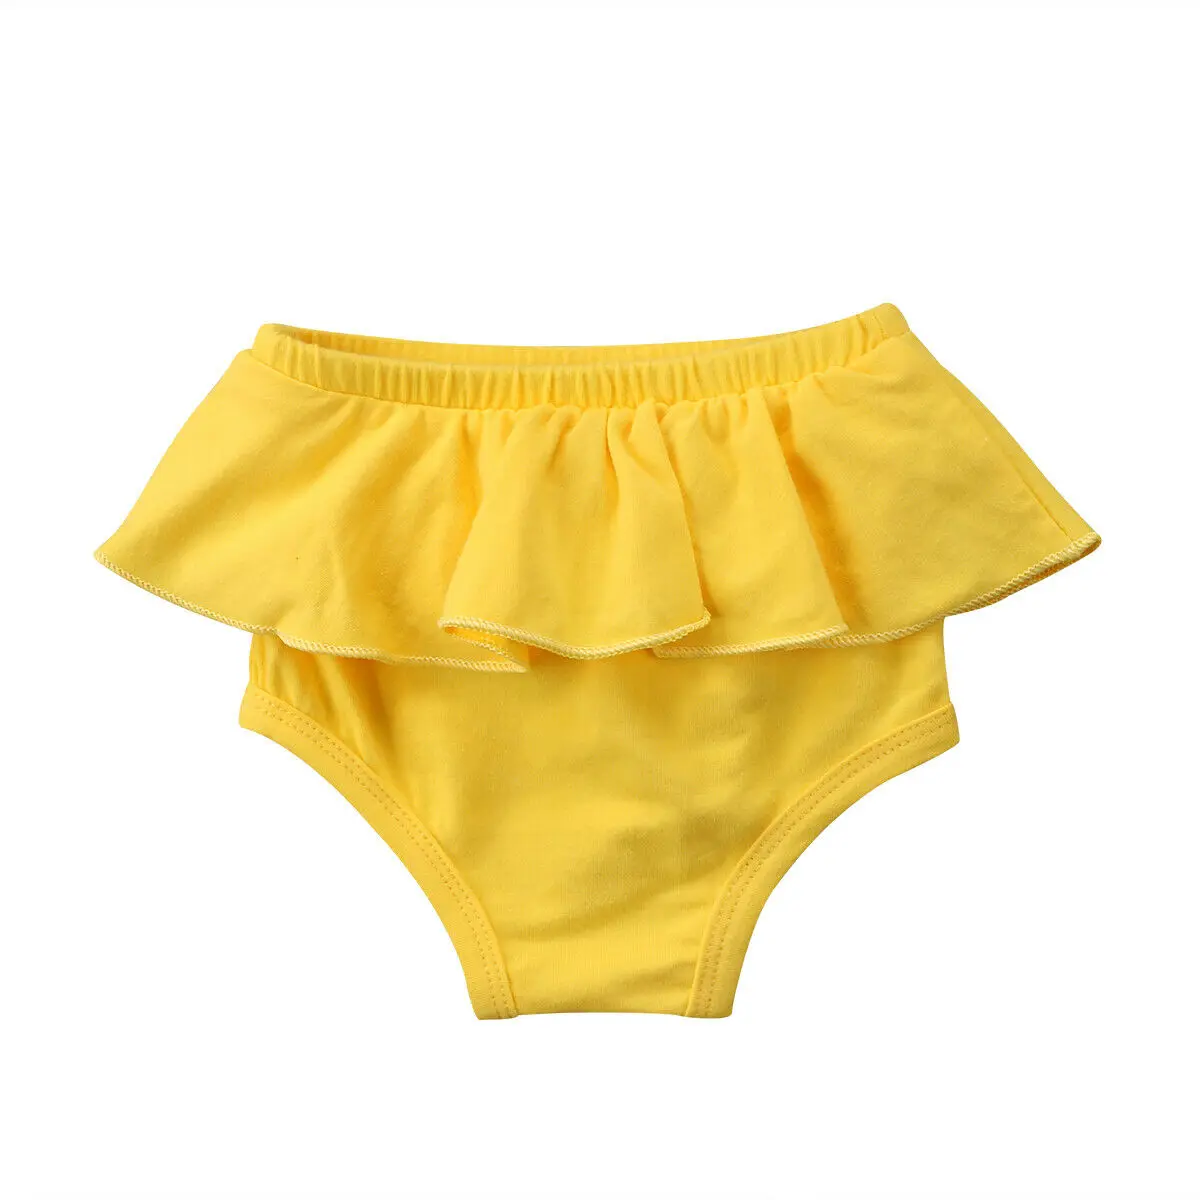 Lovely Newborn Kid Baby Girl Panties PP Shorts Ruffle Tutu Shorts Summer New Solid Bloomer Diaper Cover Briefs 7 Colors - Цвет: Цвет: желтый